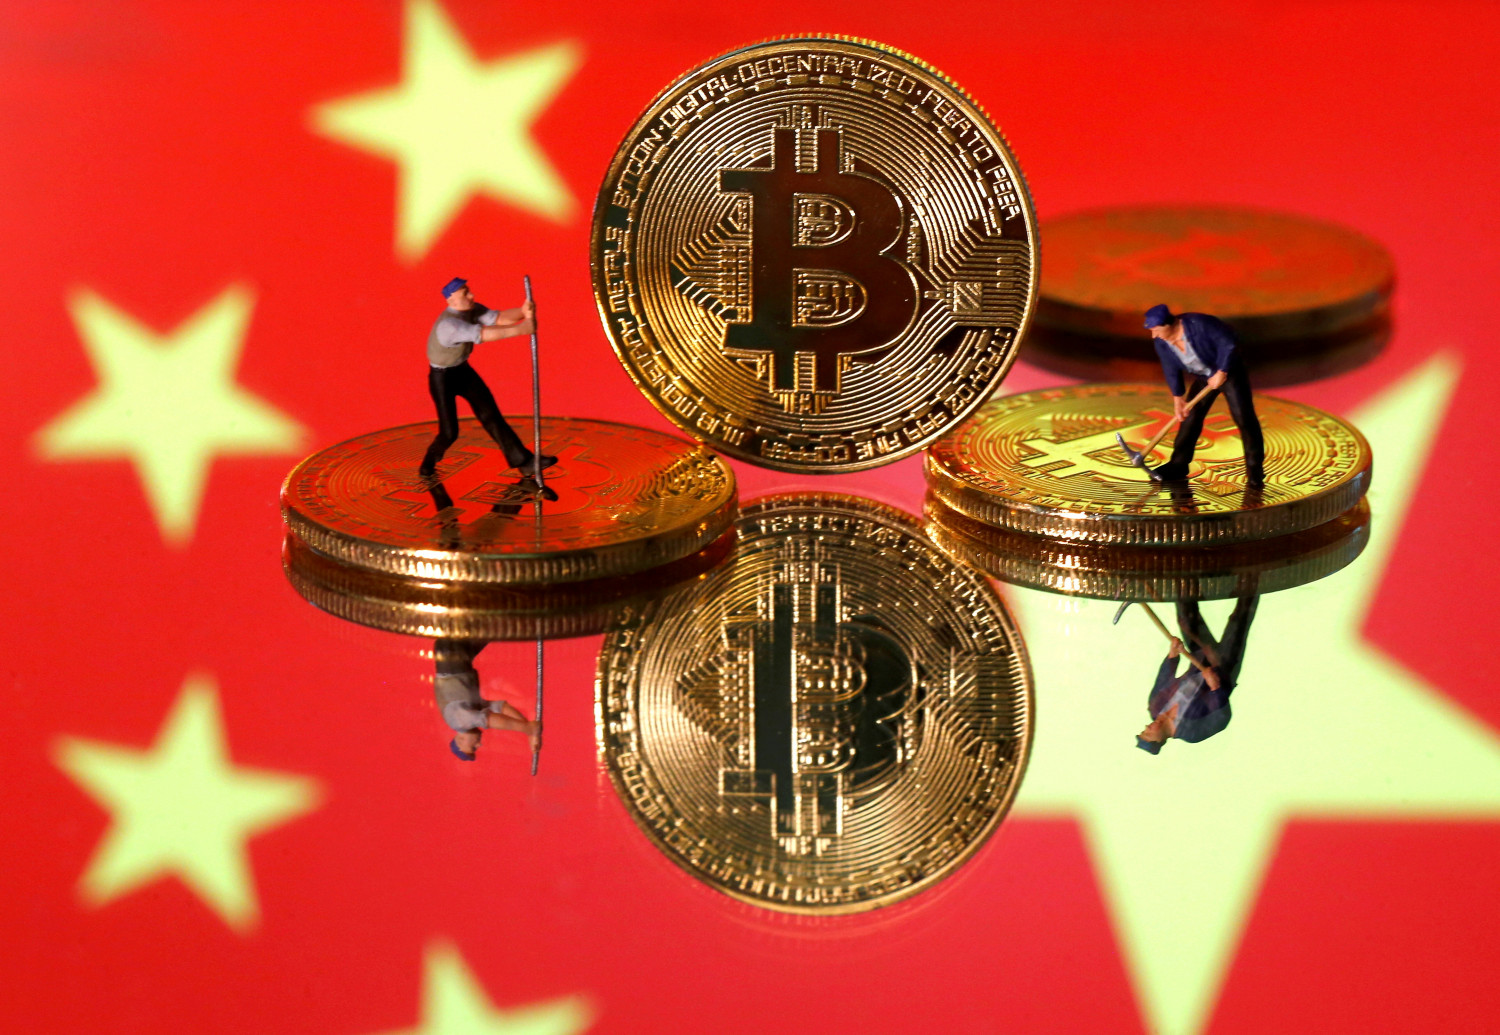 le bitcoin malmene apres de nouvelles mesures de repression en chine 20210924152516 